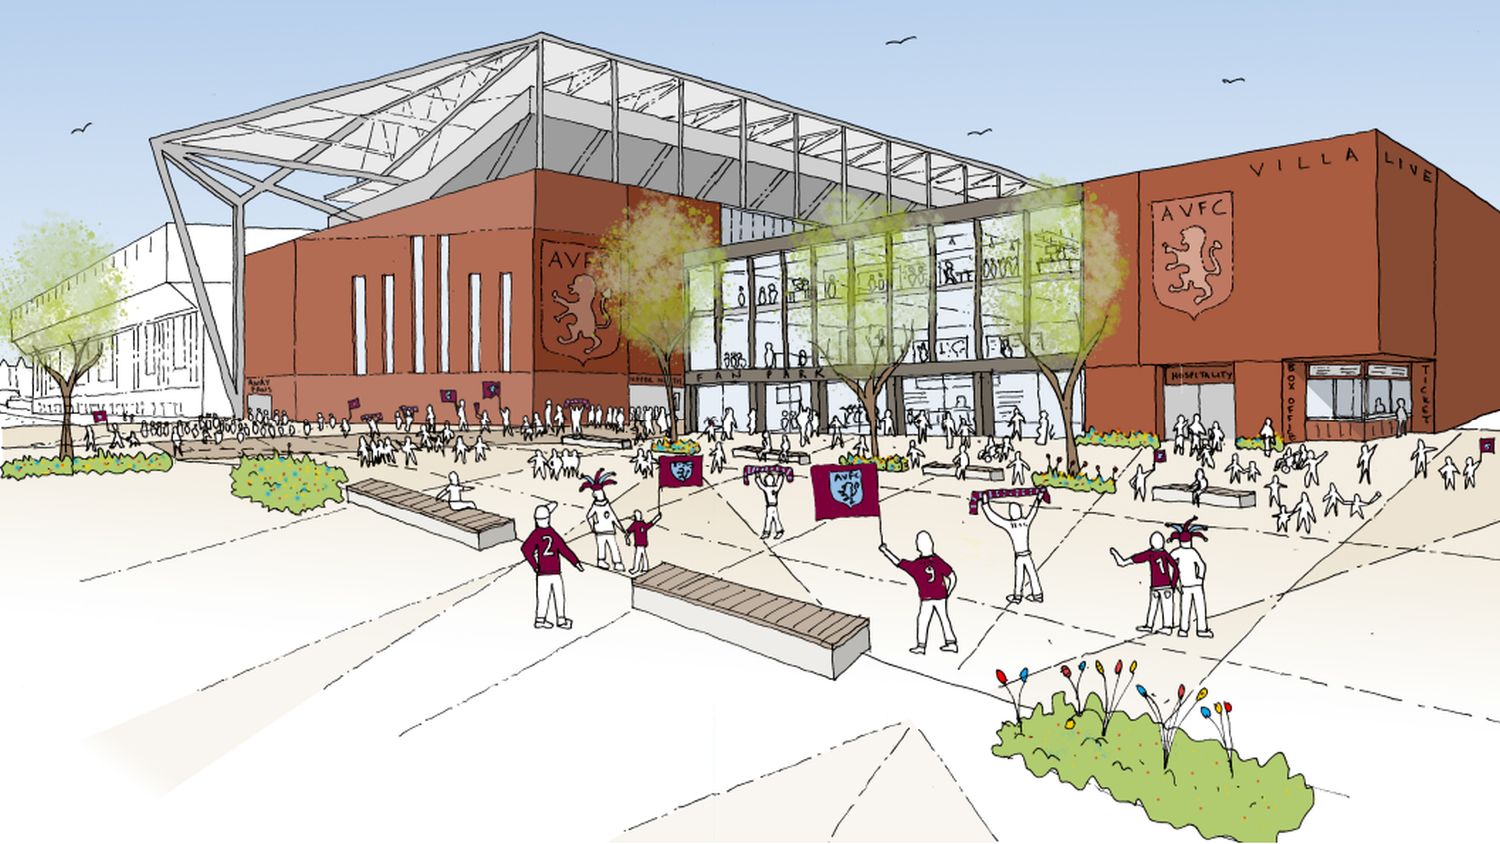 Artist's impression of the Aston Villa stadium expansion, as seen from Witton Lane (Image courtesy of Aston Villa FC)